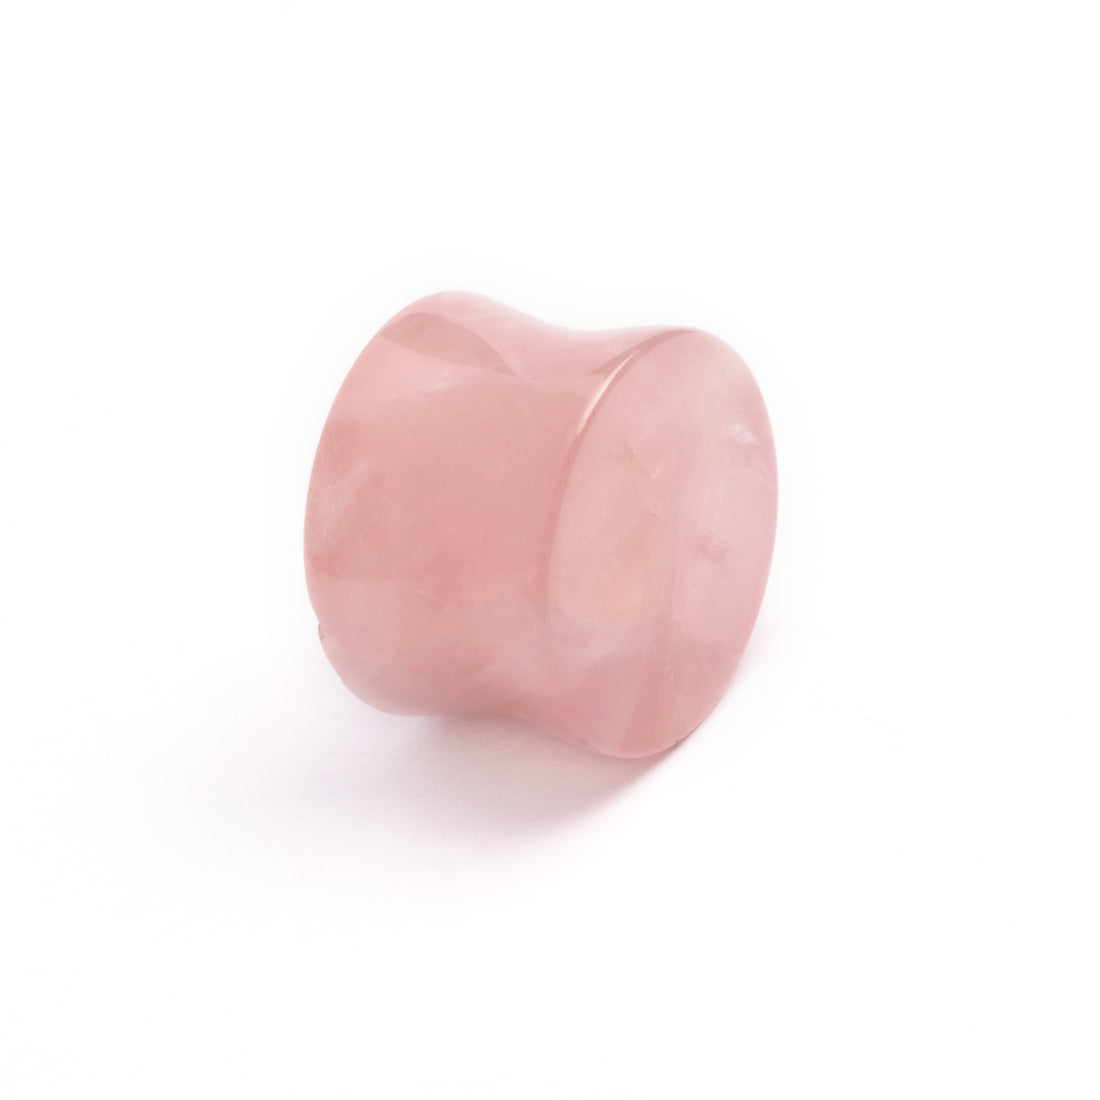 single rose quartz double flare stone ear plug right front view